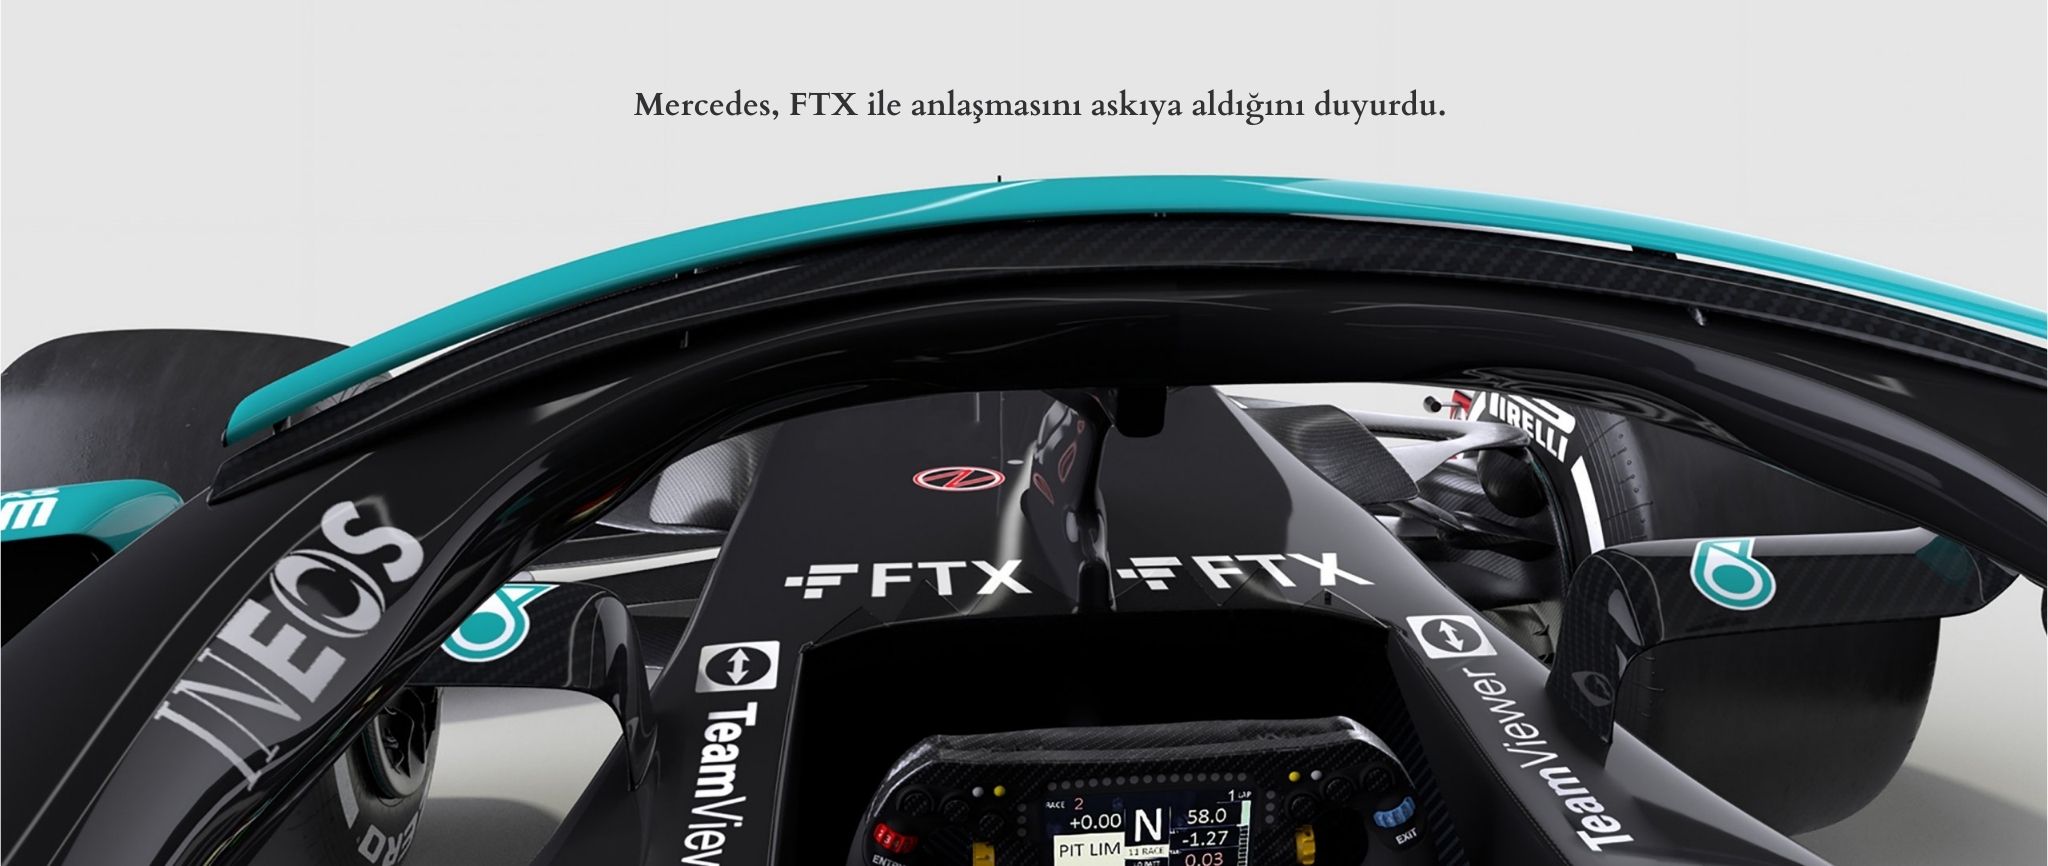 Mercedes Ftx Anlasmasi Sonlandi